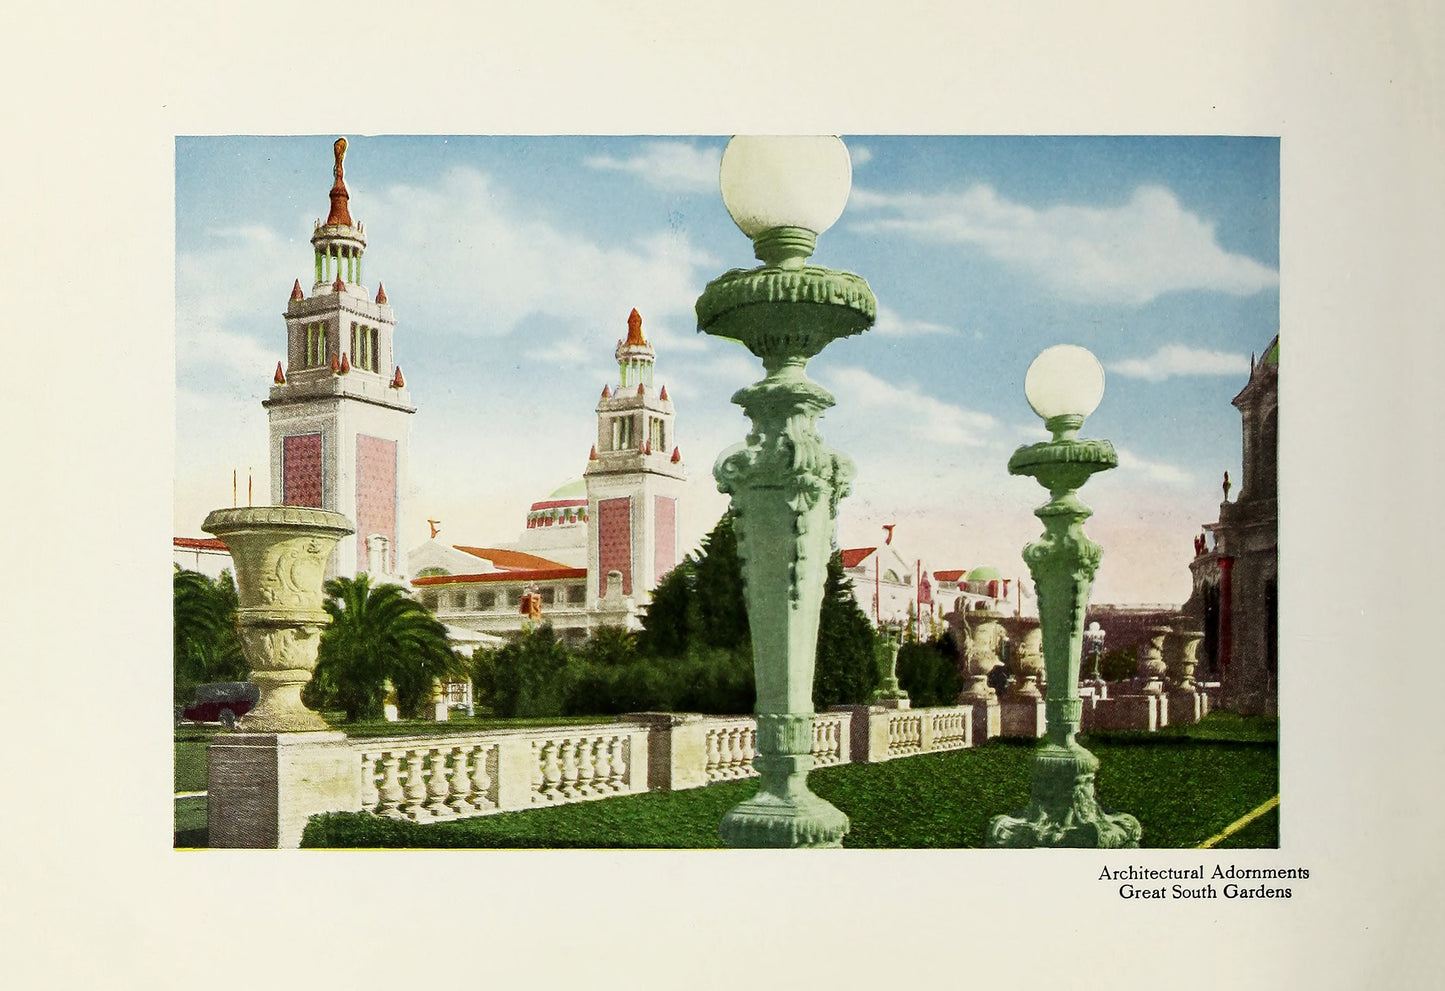 Panama Vintage Color Type Postcards [31 Images]